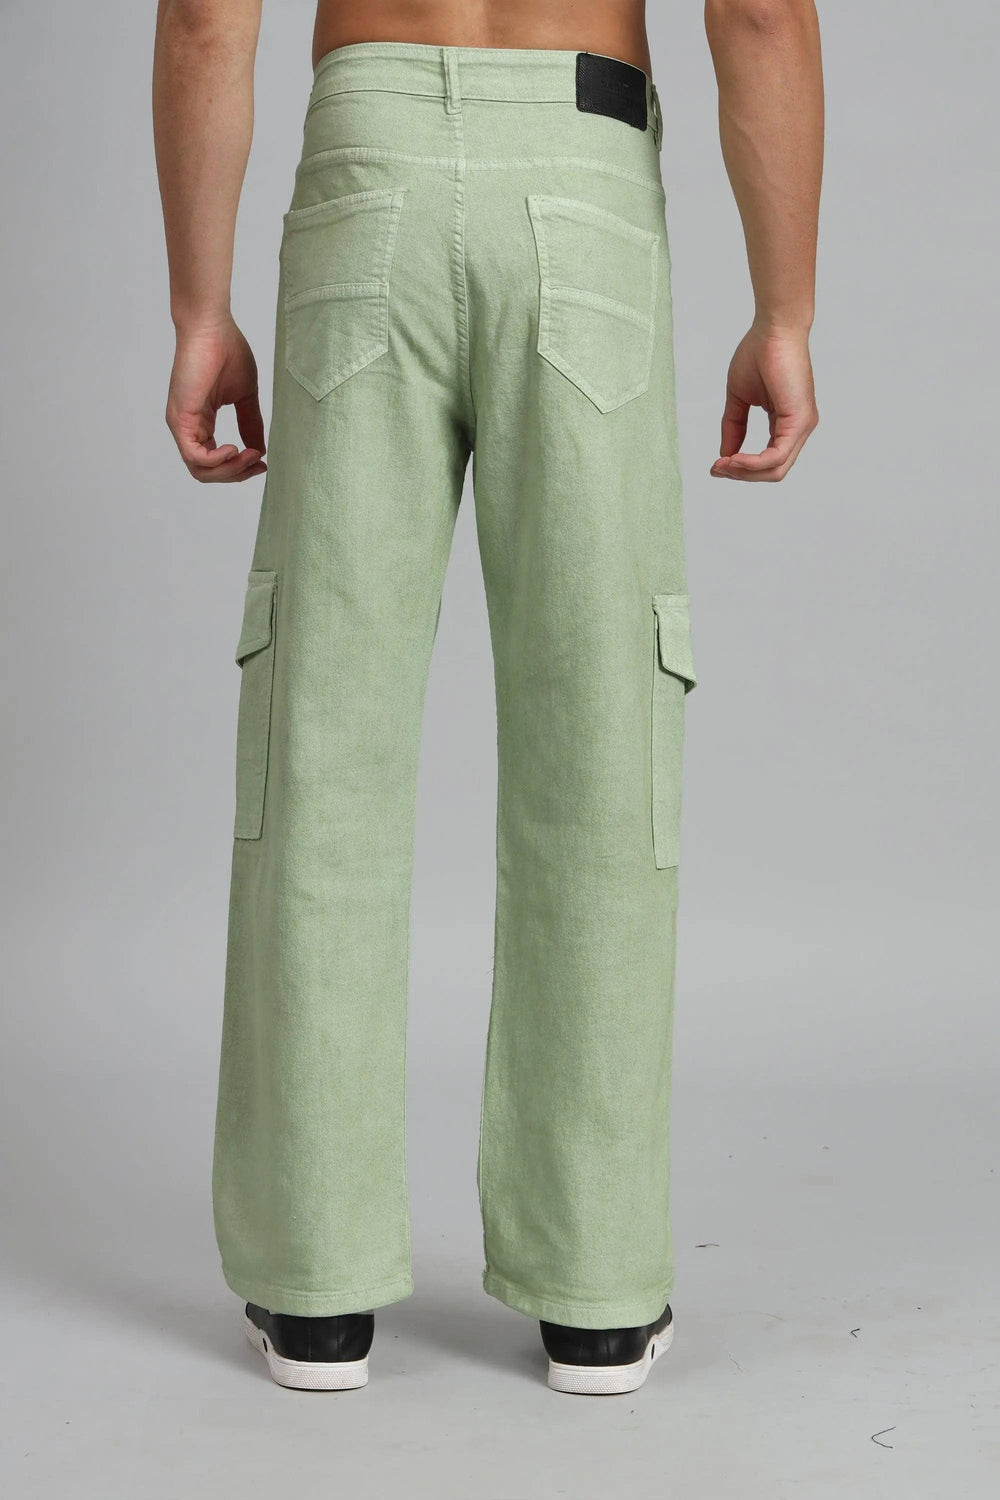 Men's Loose Fit Multiple Pocket Pista Denim Cargo Pant - Peplos Jeans 